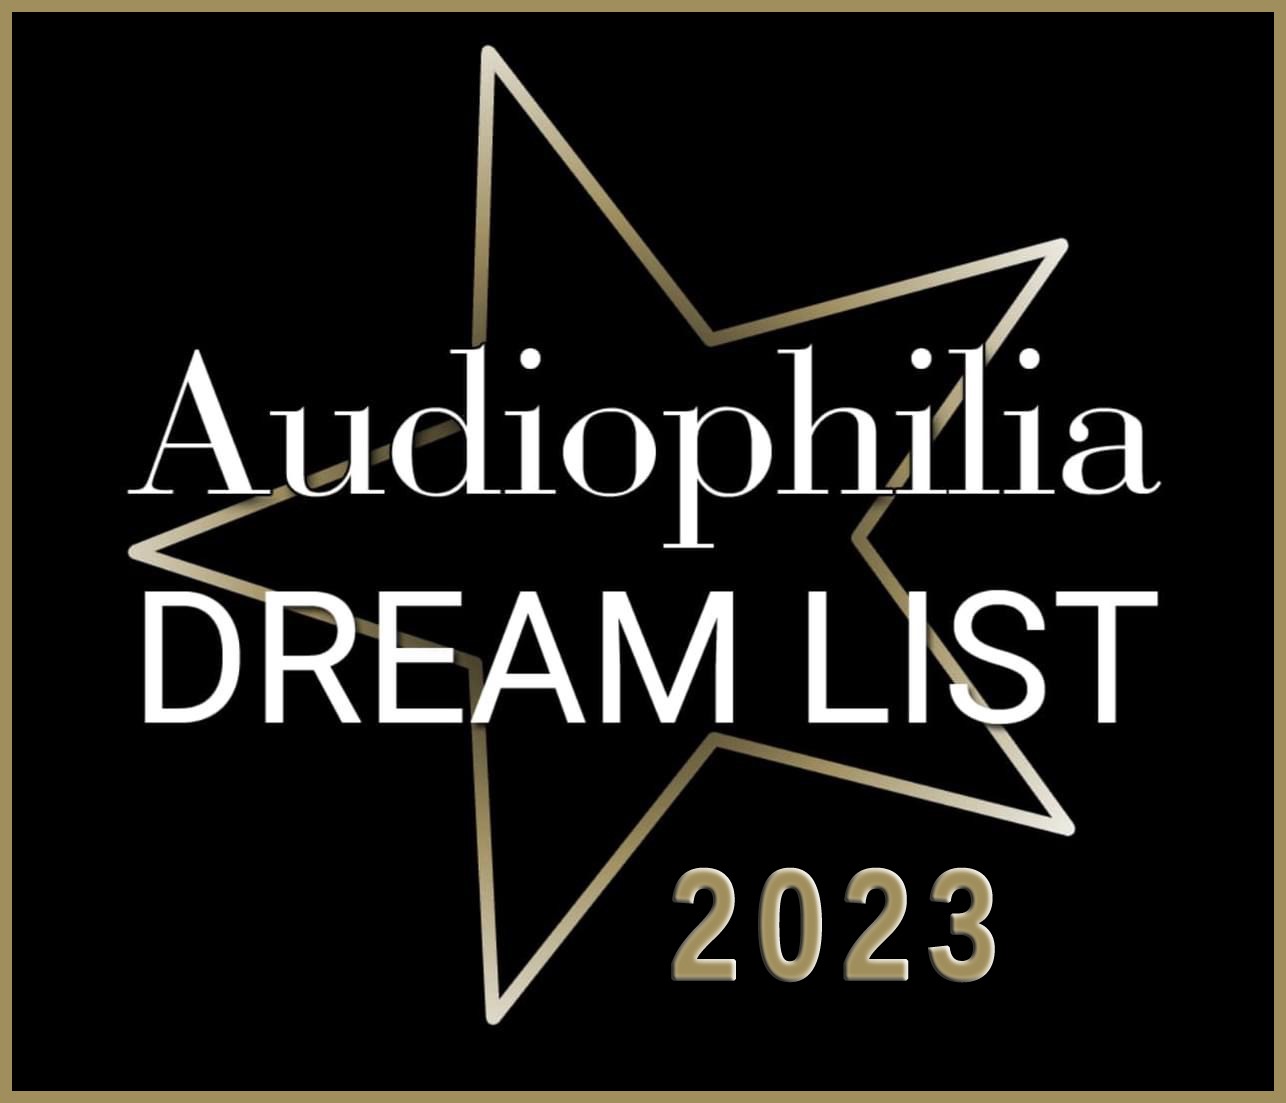 Audiophilia Dream list award